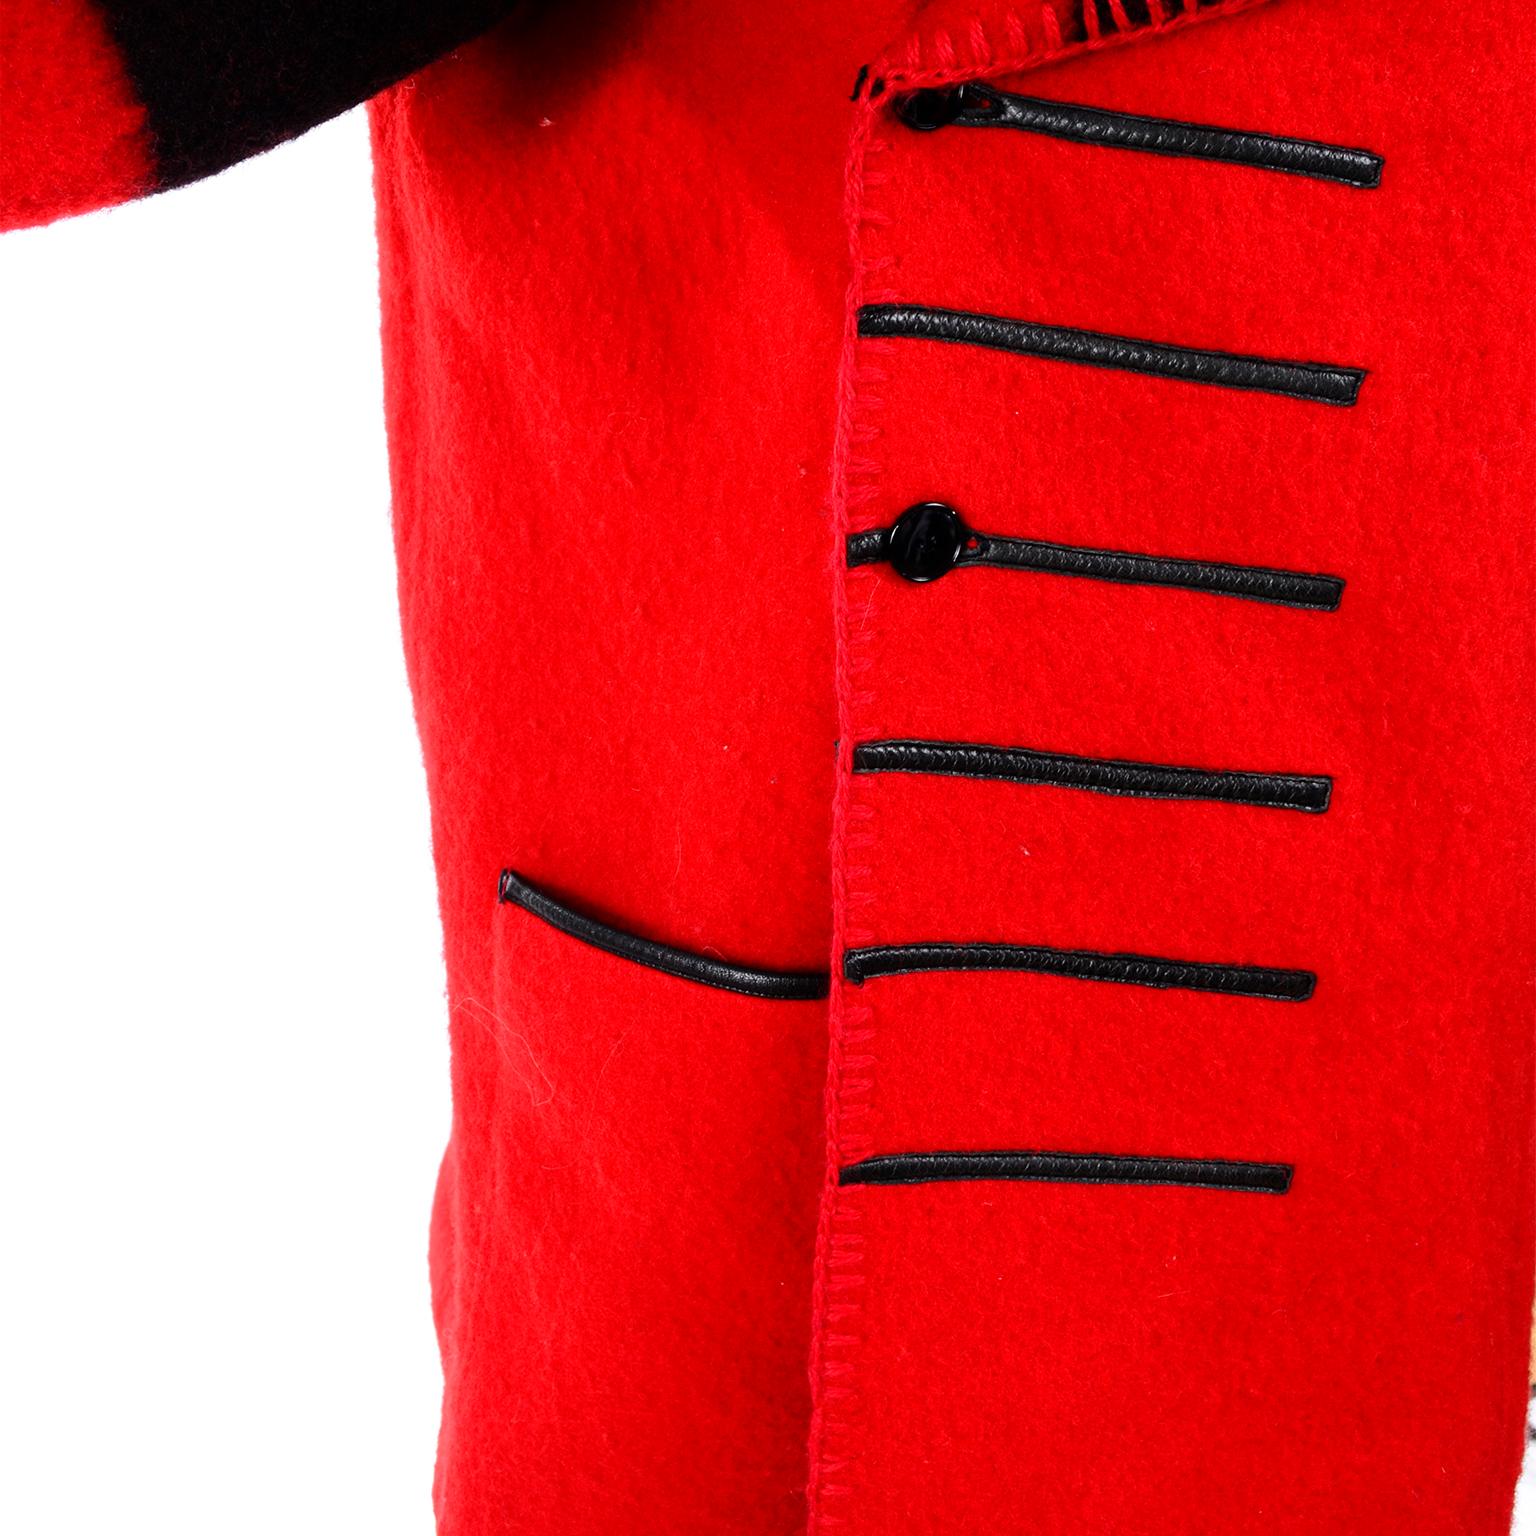 Jean Charles de Castelbajac 1980s Red & Black Wool Coat w/ Leather Trim & Hood 10